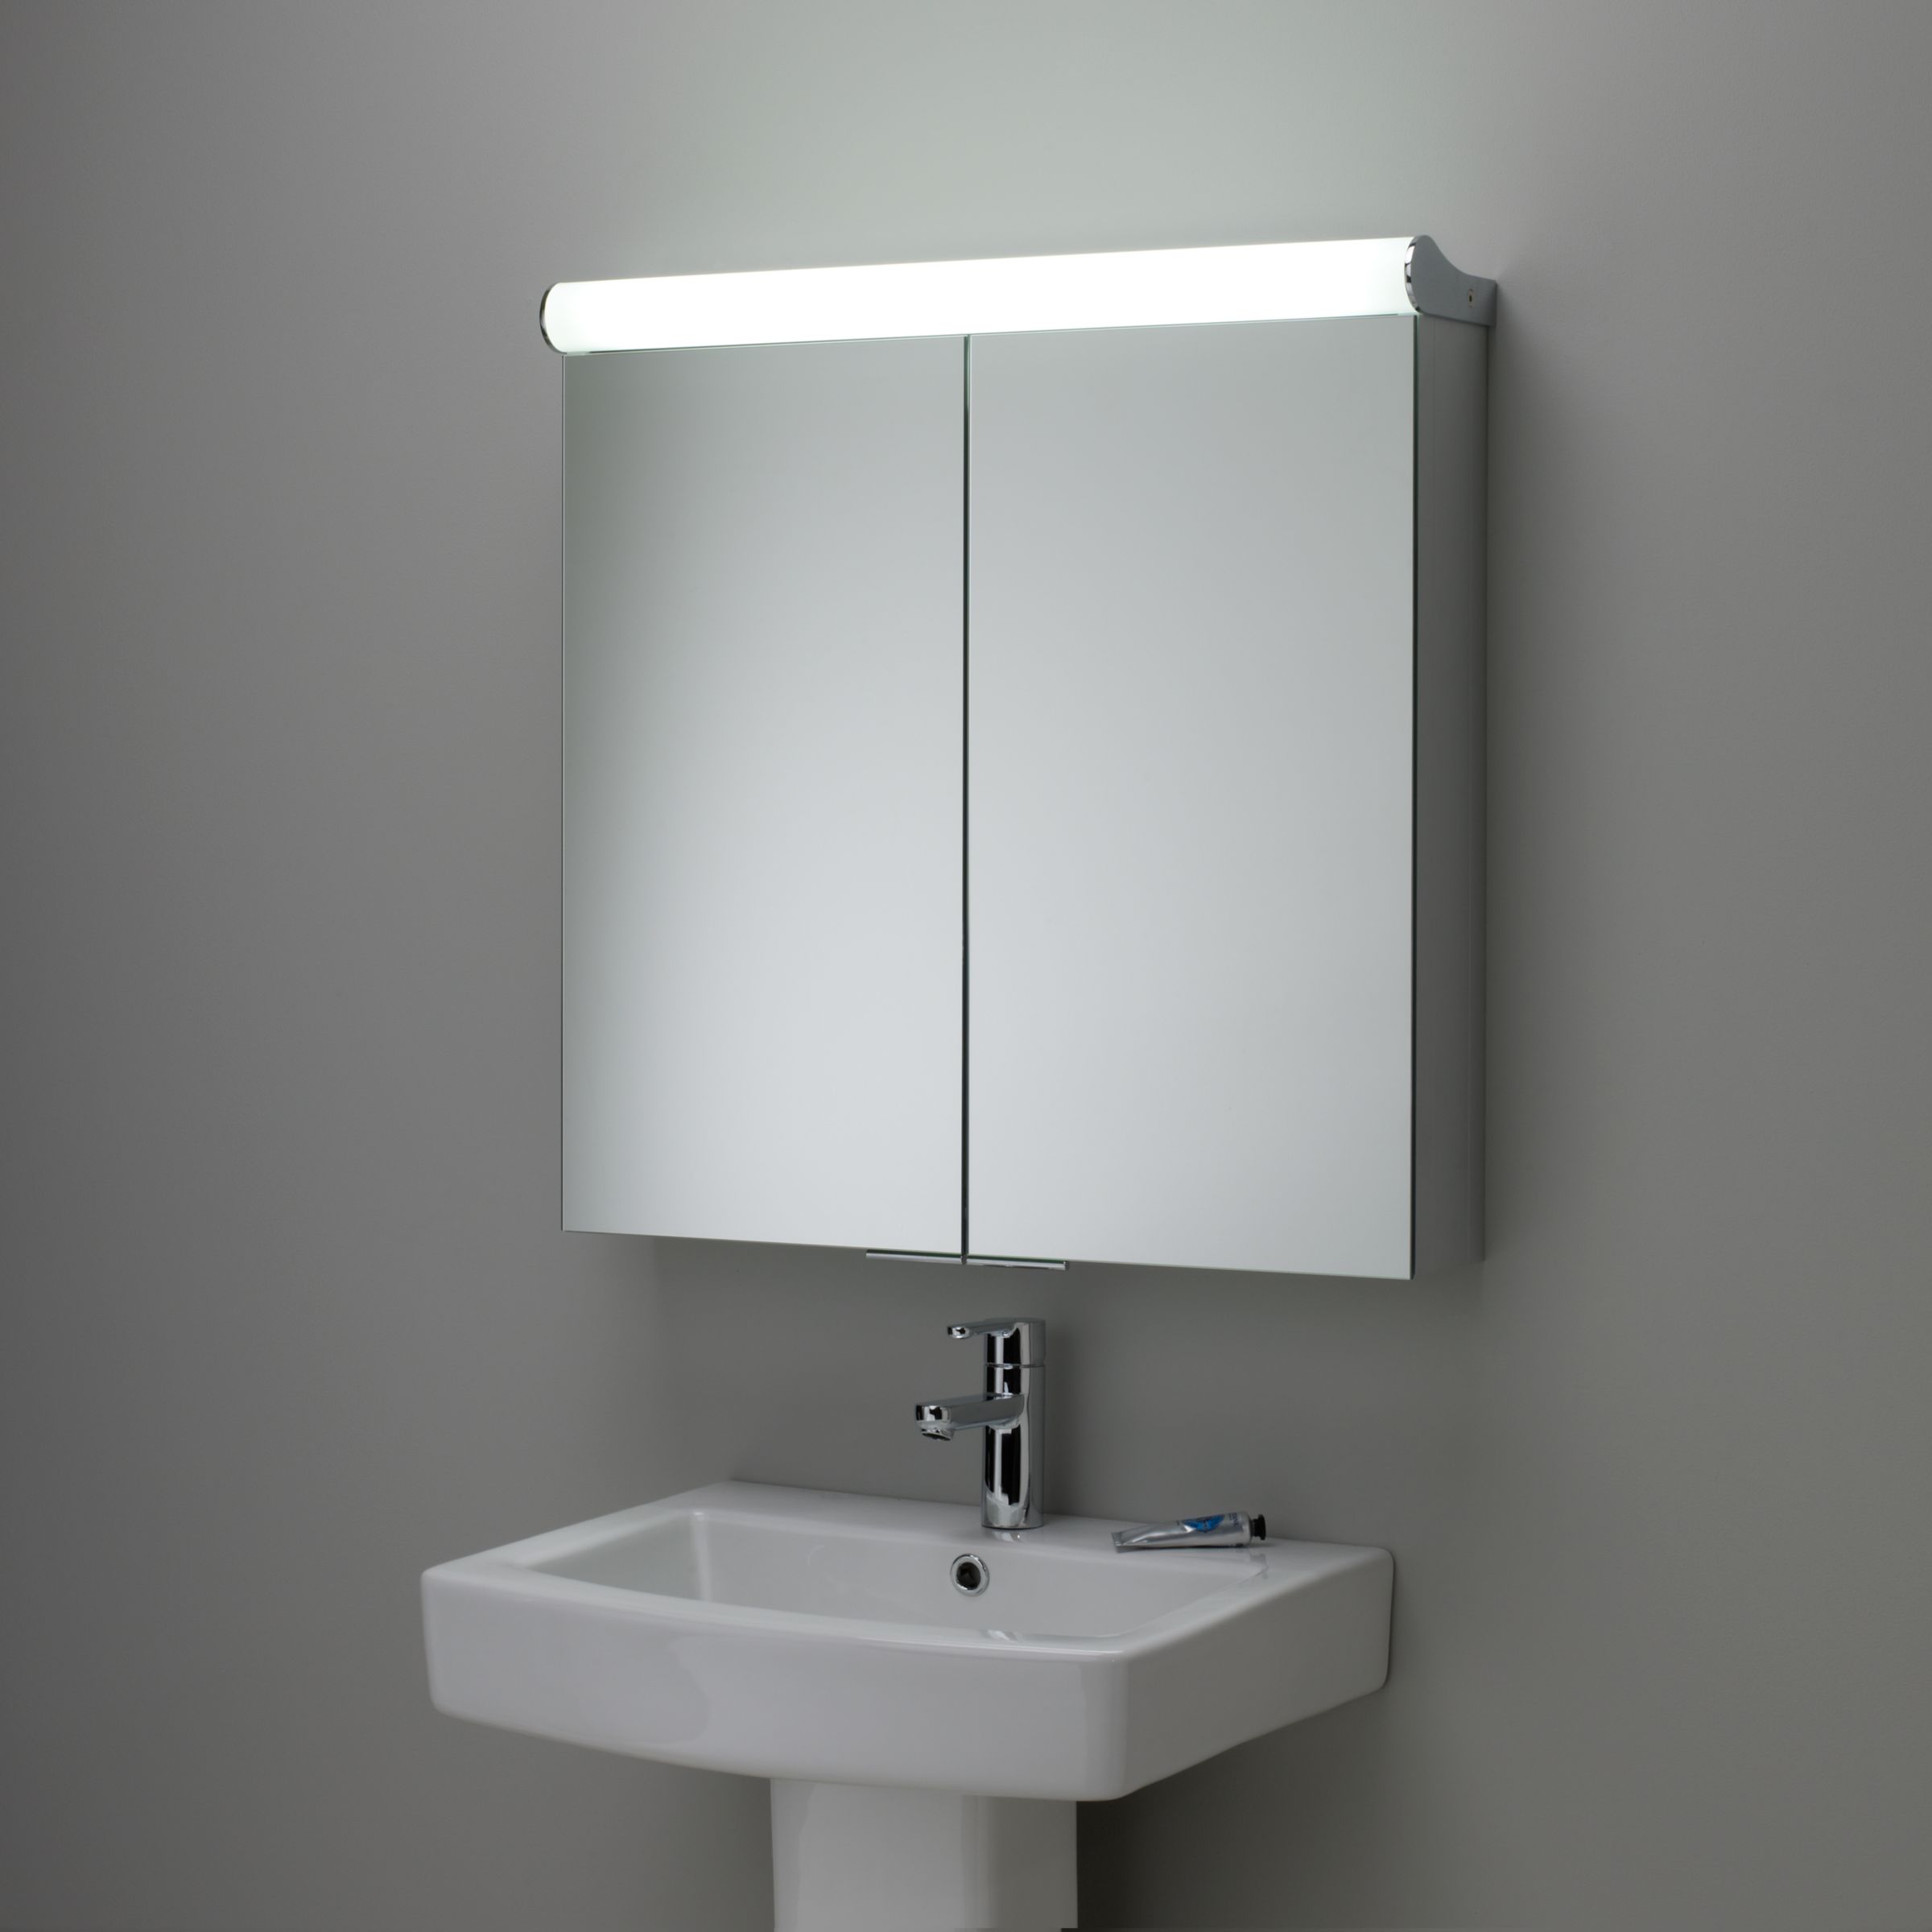 Buy Roper Rhodes Latitude Illuminated Double Bathroom Cabinet with DoubleSided Mirror  John Lewis